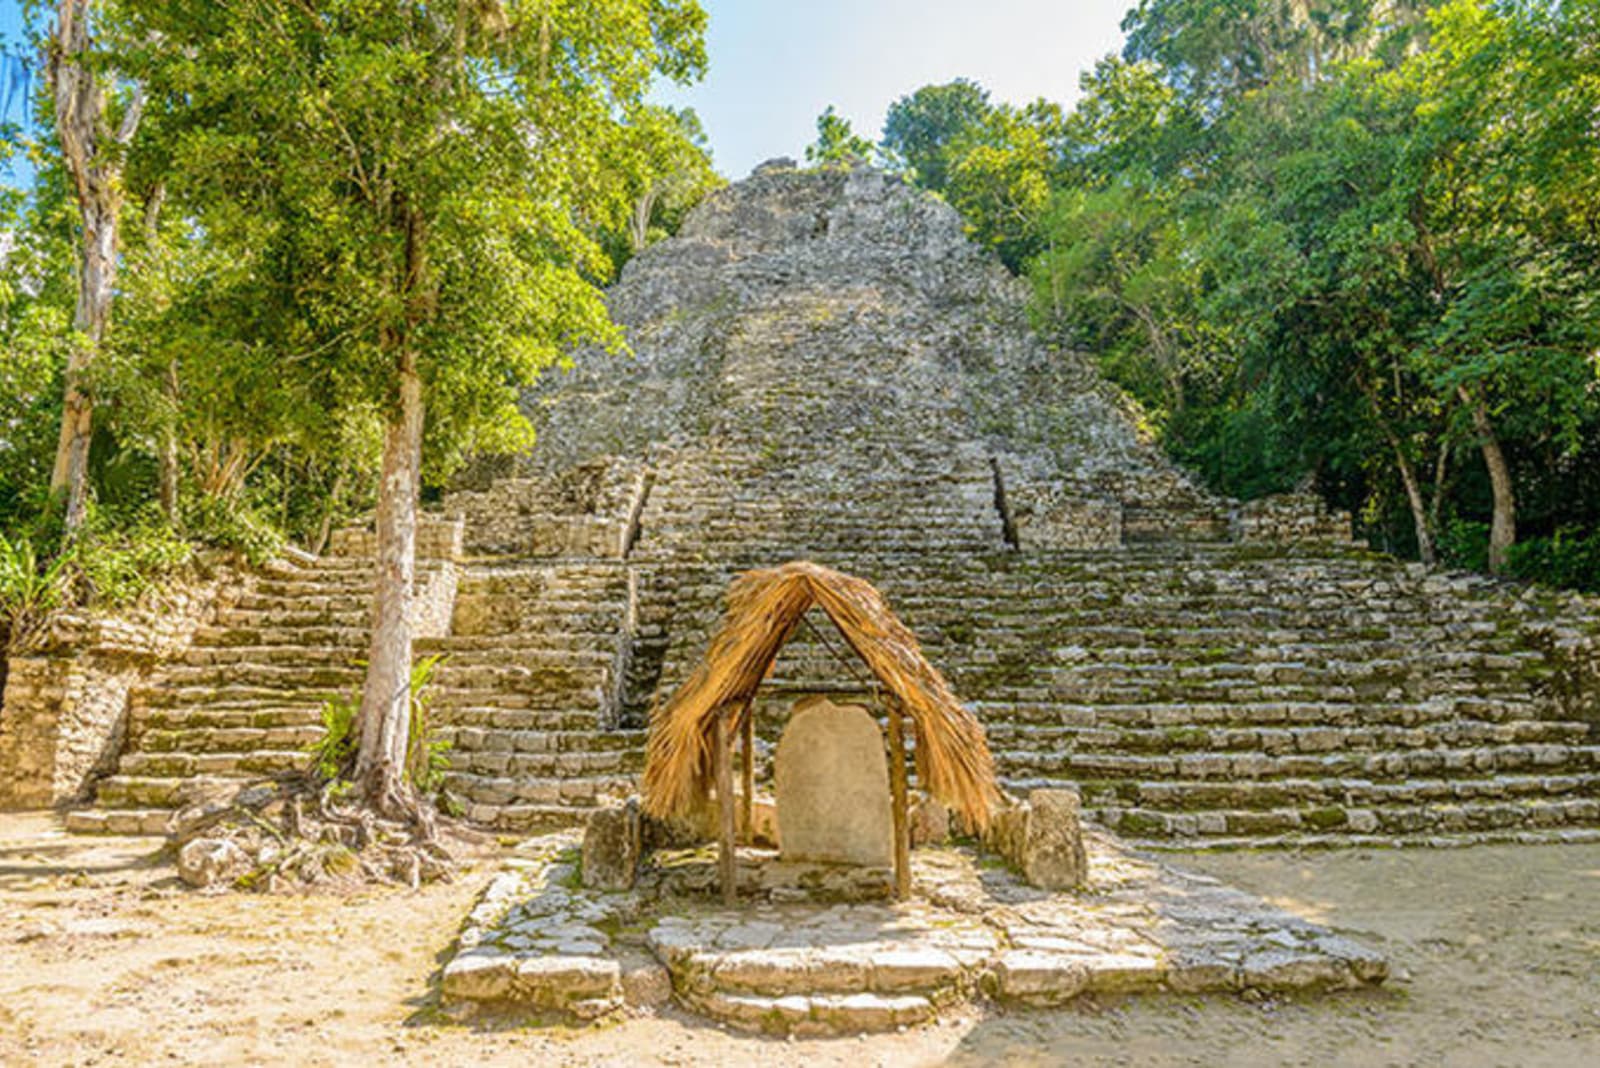 Coba - an ancient Mayan structure, built between towering trees